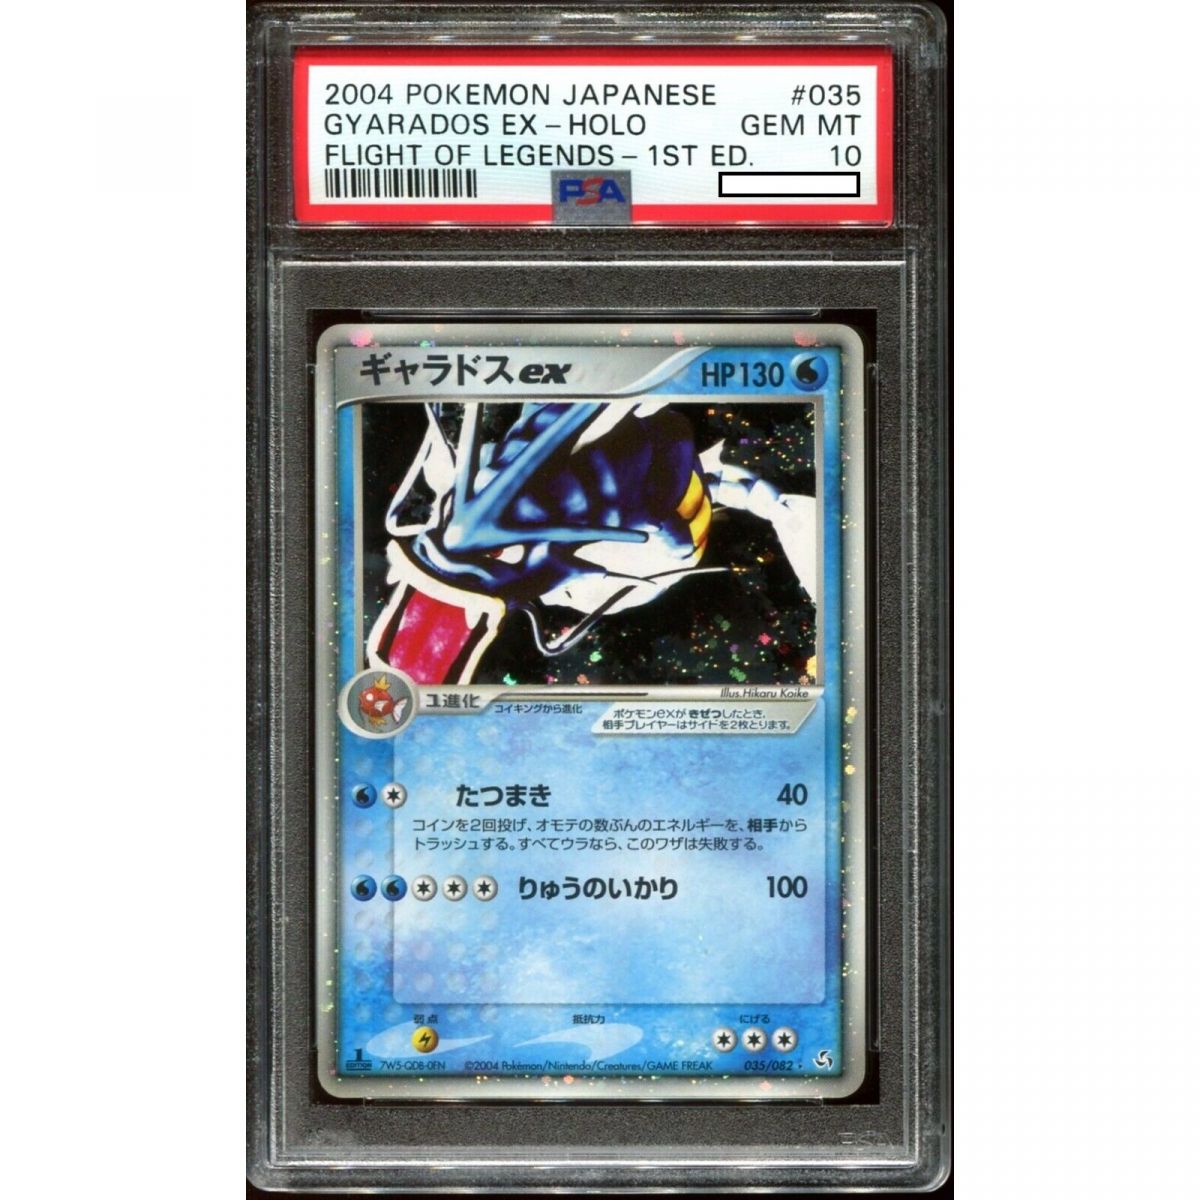 Item Pokémon - Graded Card - Gyarados Ex Flight Of Legends Japanese 2004 1st Edition [PSA 10 - Gem Mint]